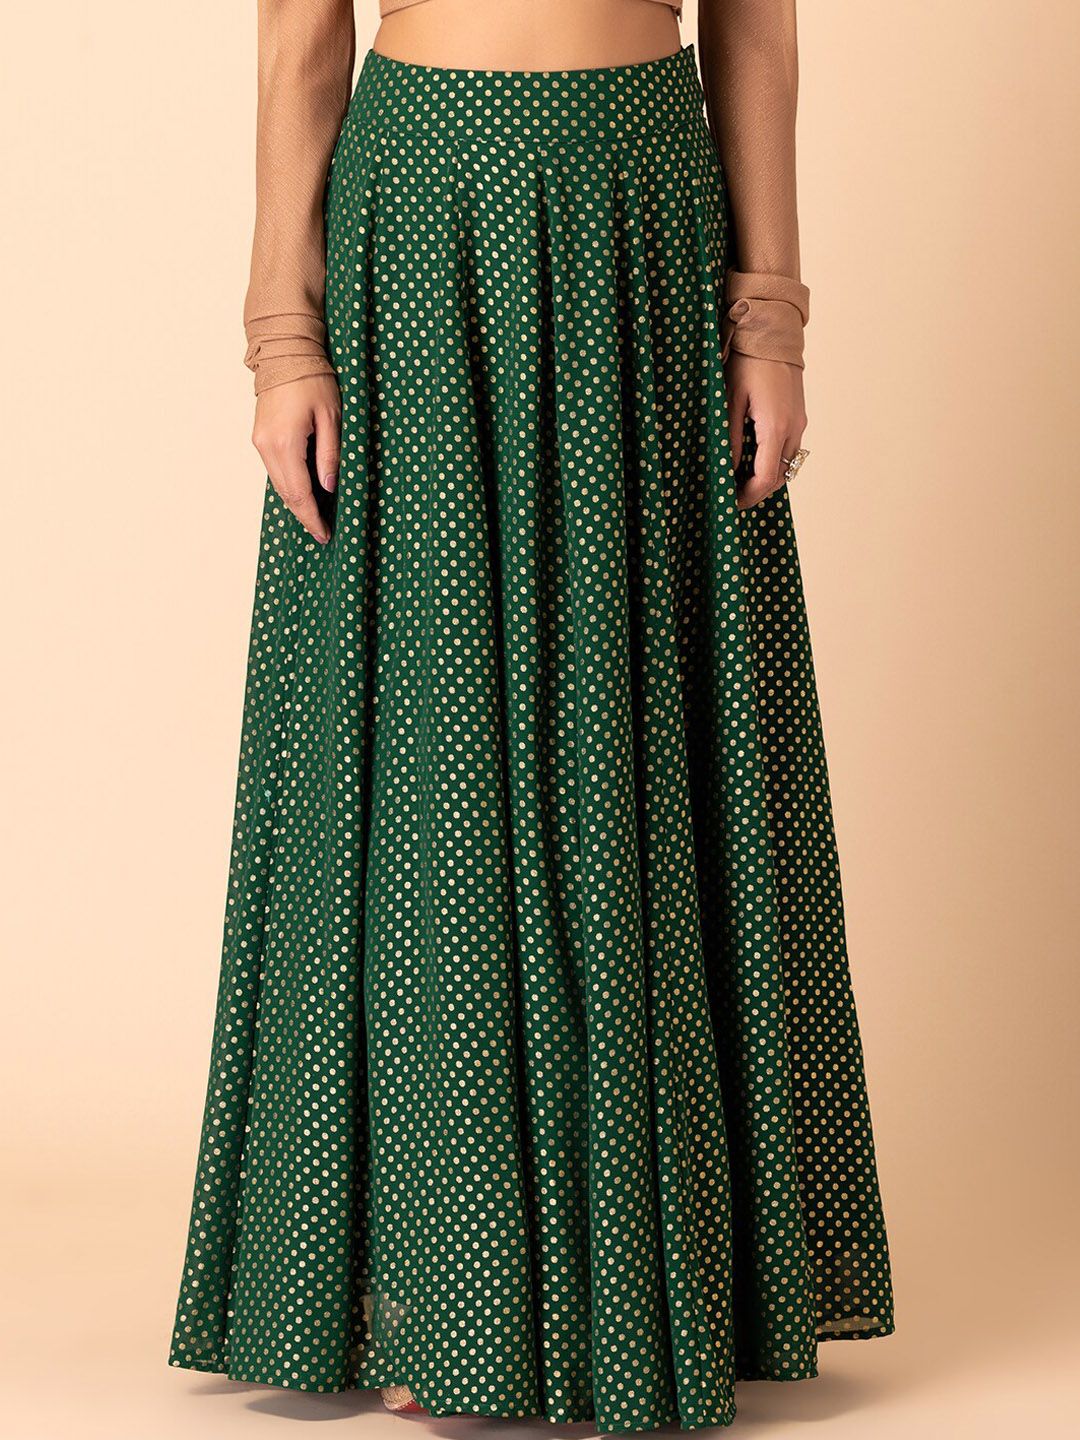 INDYA  Polka Dot Foil Printed Lehenga Skirt Price in India